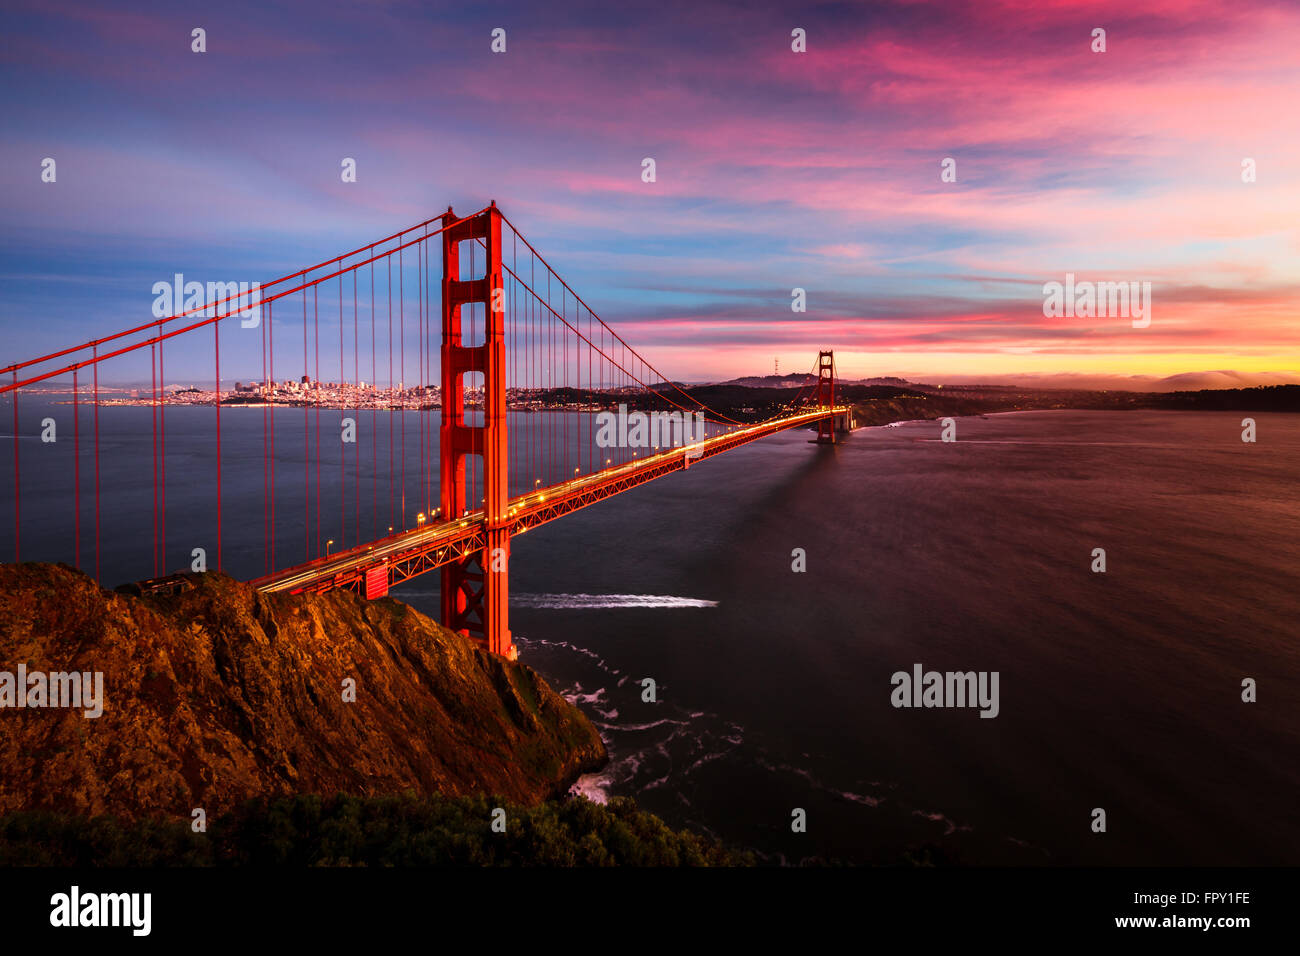 Colorful sunset at the Golden Gate Bridge in San Francisco, California, USA Stock Photo